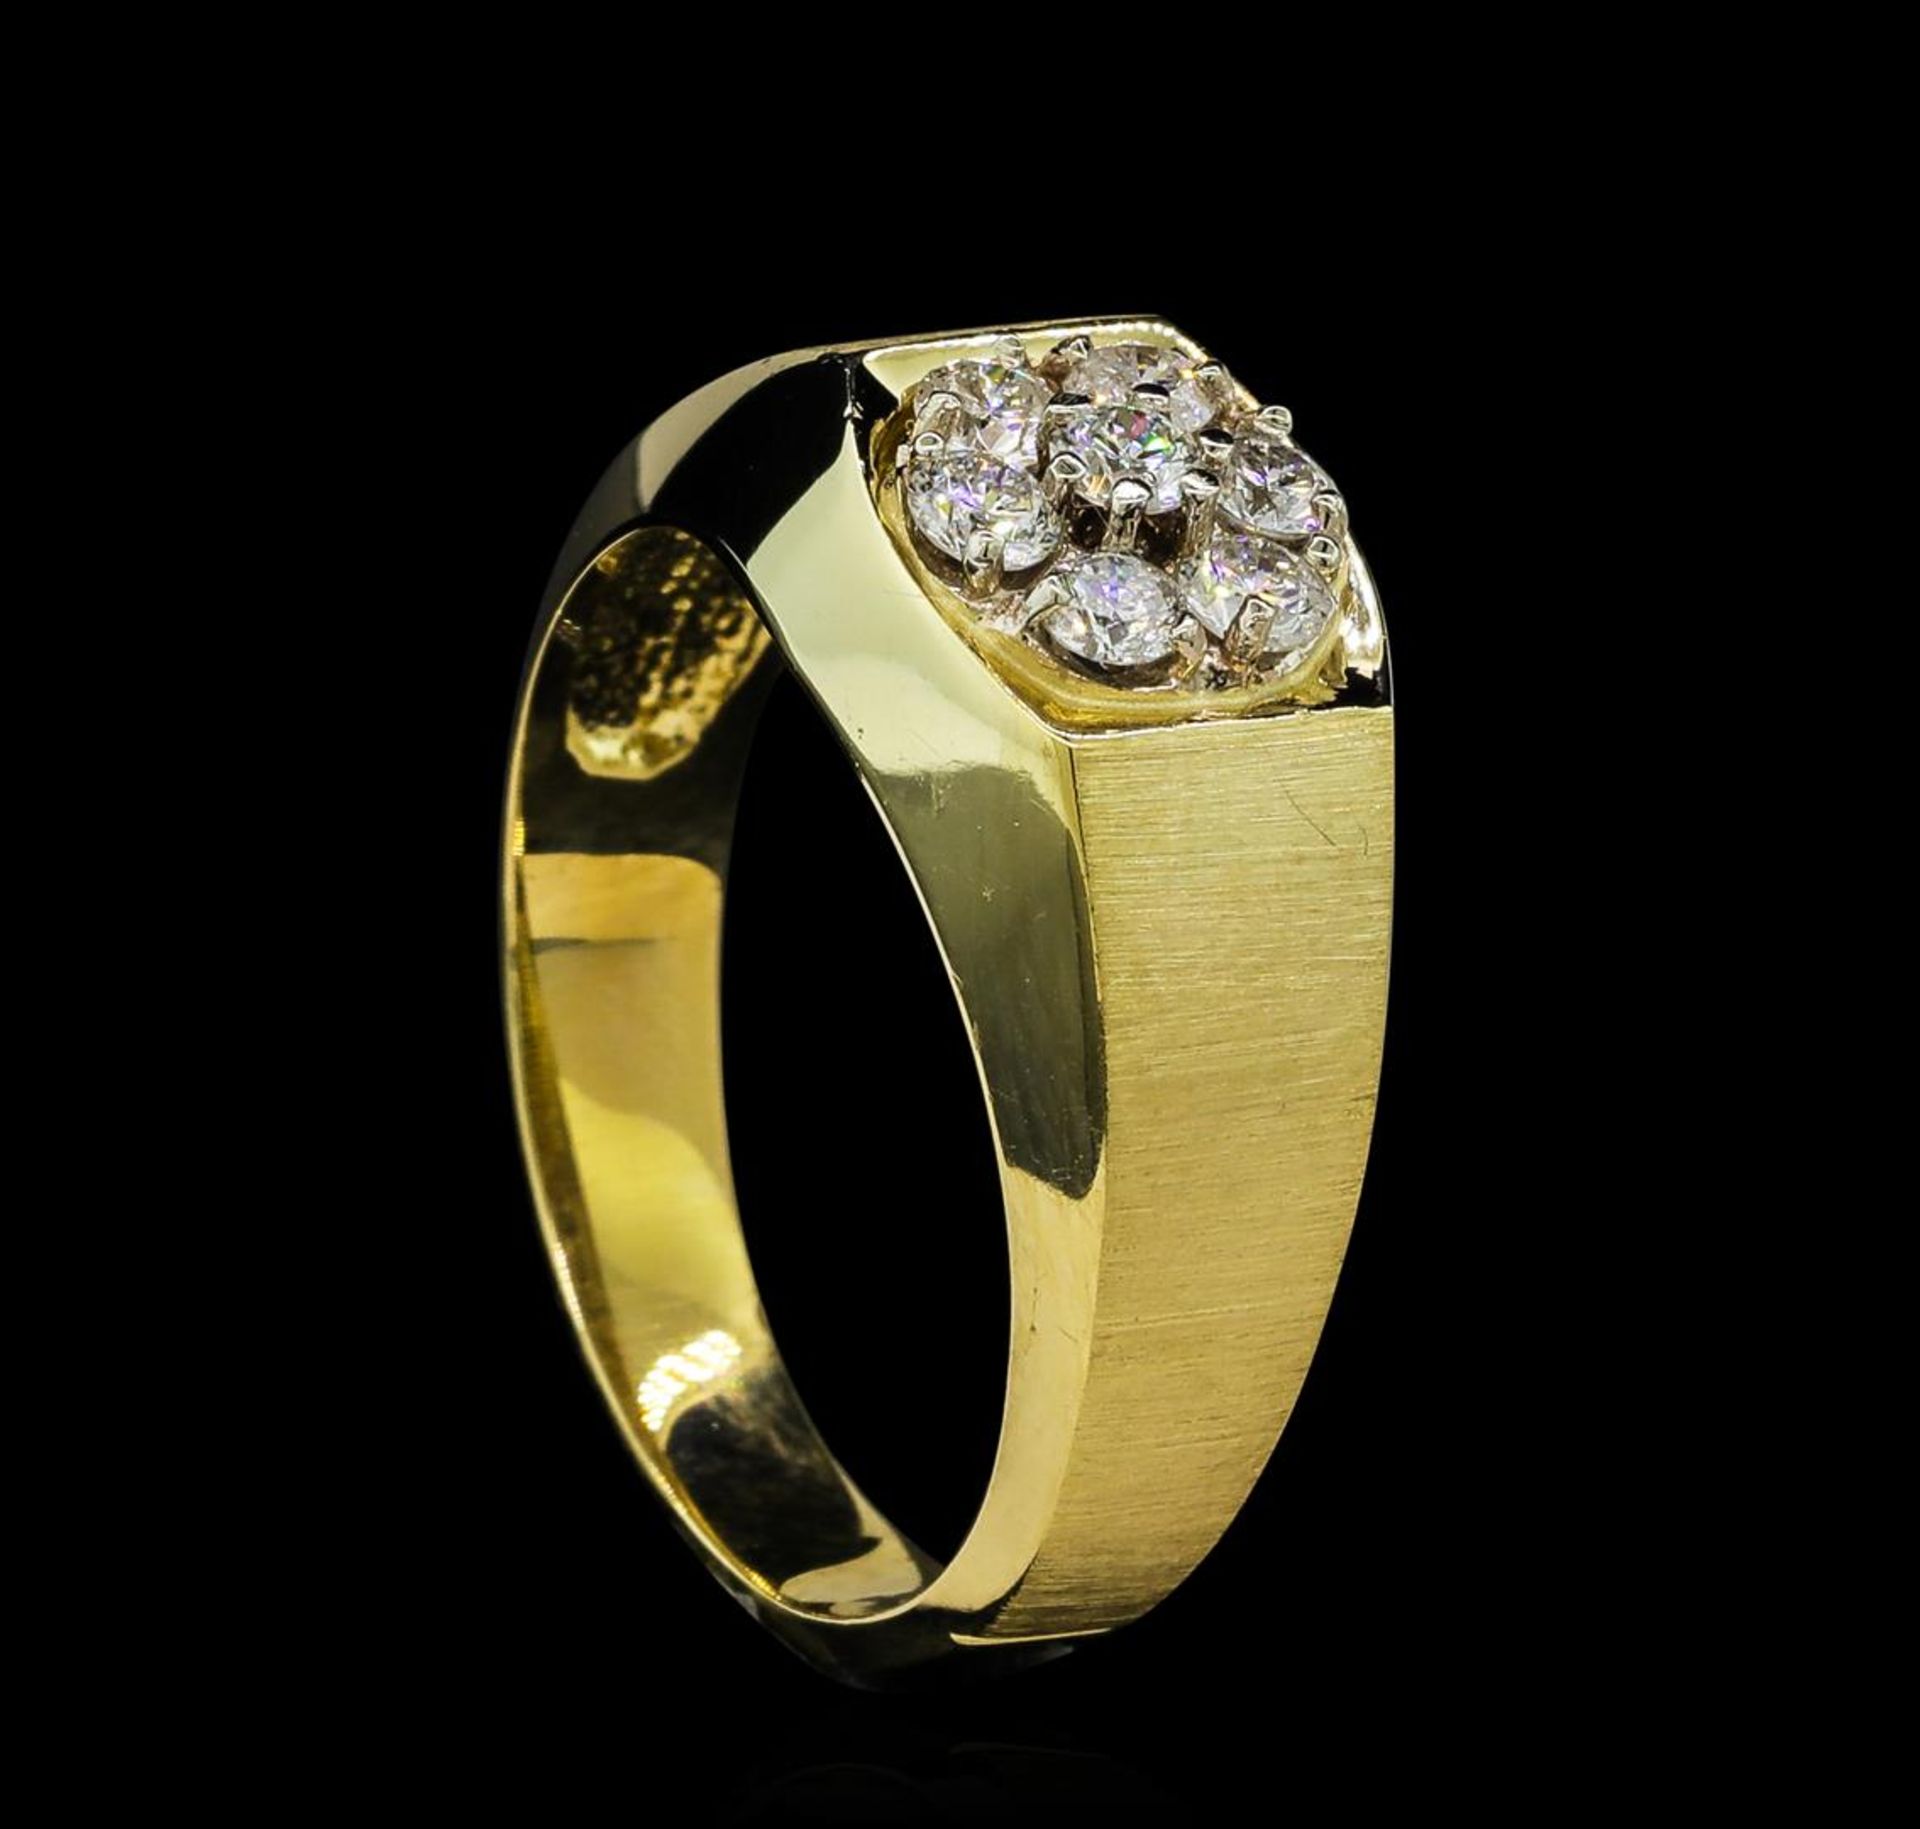 0.56 ctw Diamond Ring - 14KT Yellow Gold - Image 4 of 4